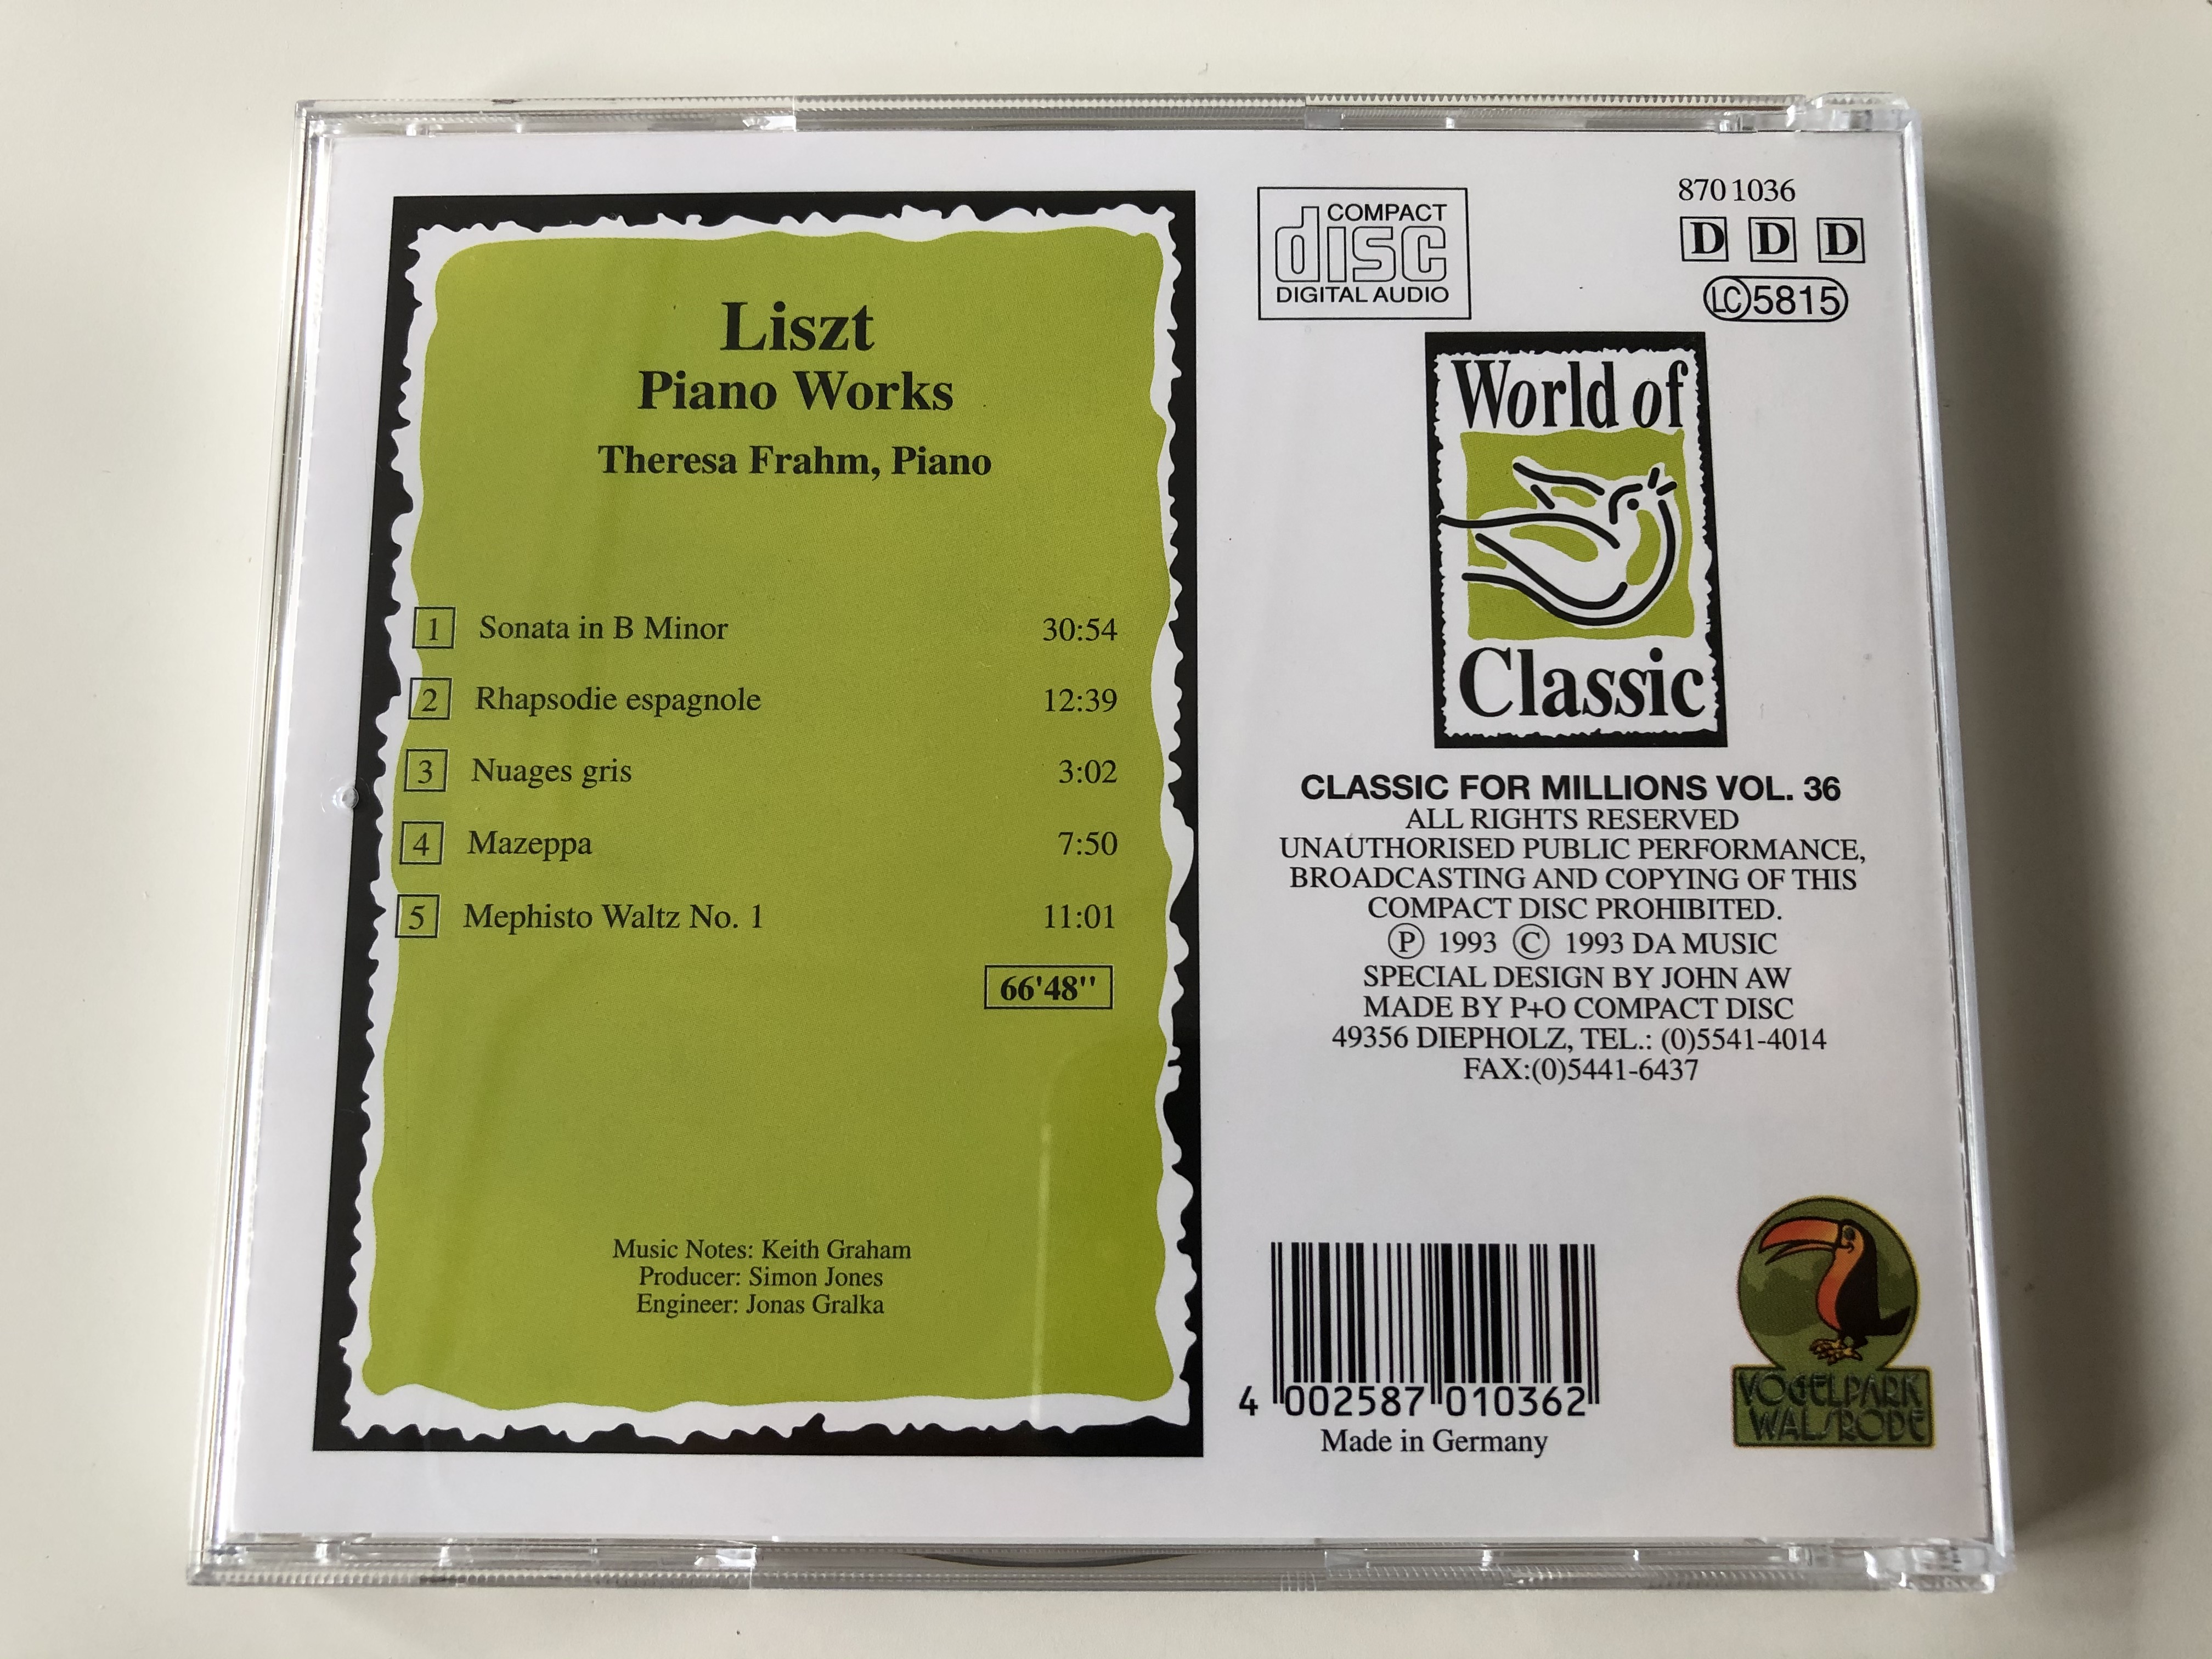 classic-for-millions-vol.-36-liszt-piano-works-world-of-classic-audio-cd-1993-870-1036-5-.jpg